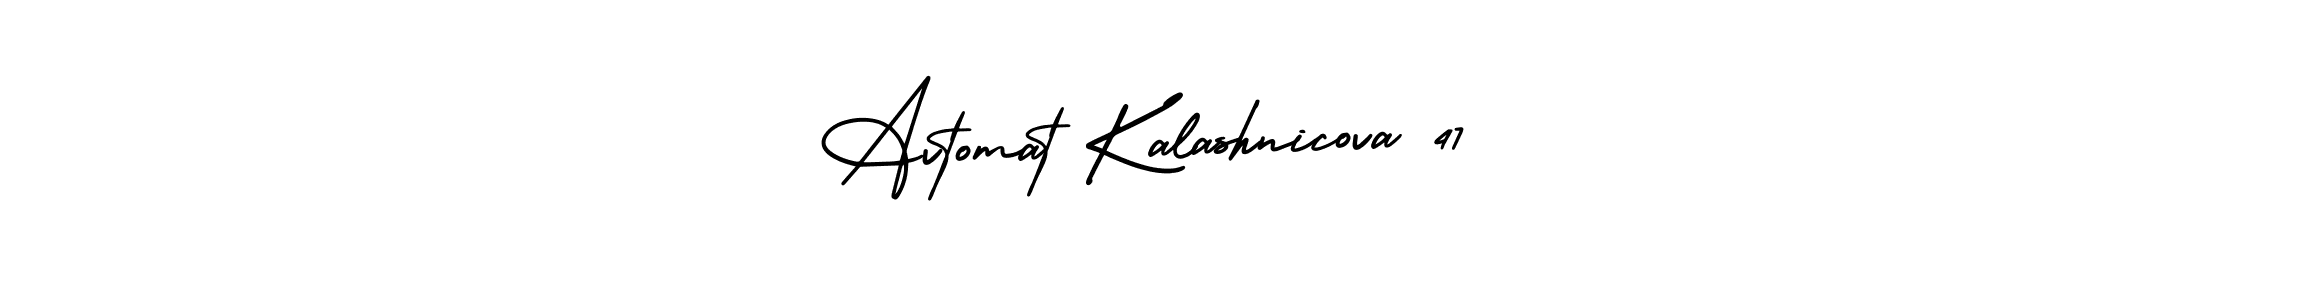 Best and Professional Signature Style for Avtomat Kalashnicova 47. AmerikaSignatureDemo-Regular Best Signature Style Collection. Avtomat Kalashnicova 47 signature style 3 images and pictures png